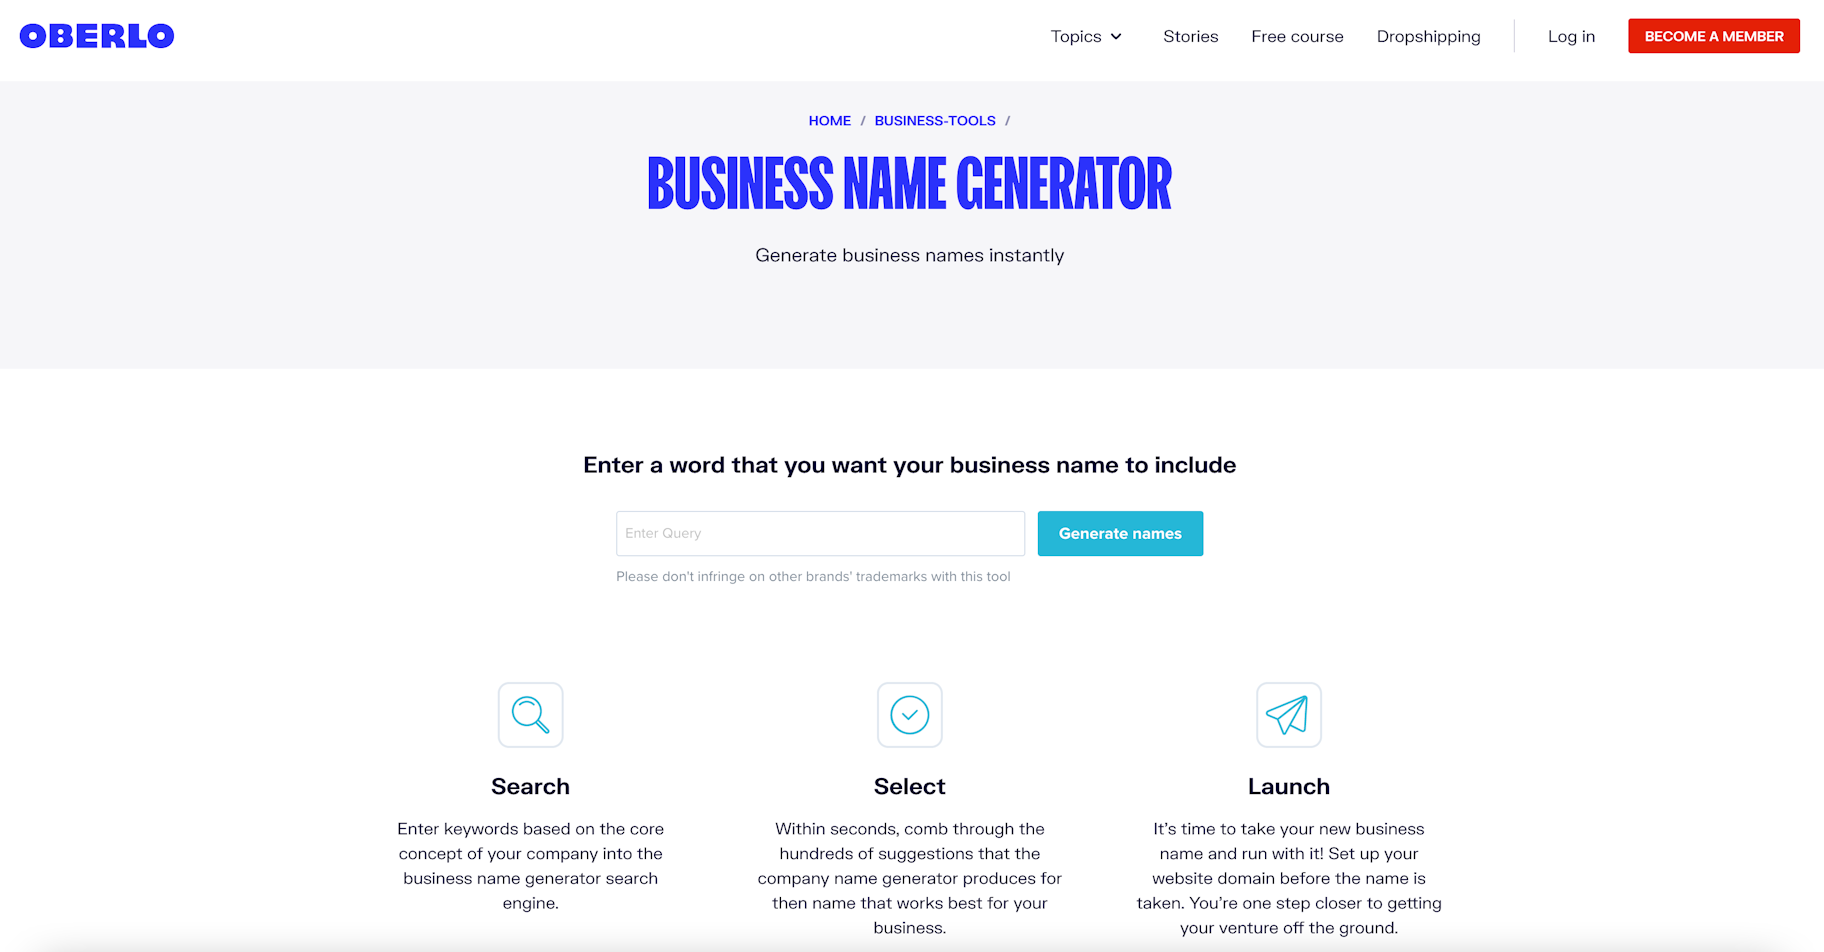 Oberlo's business name generator